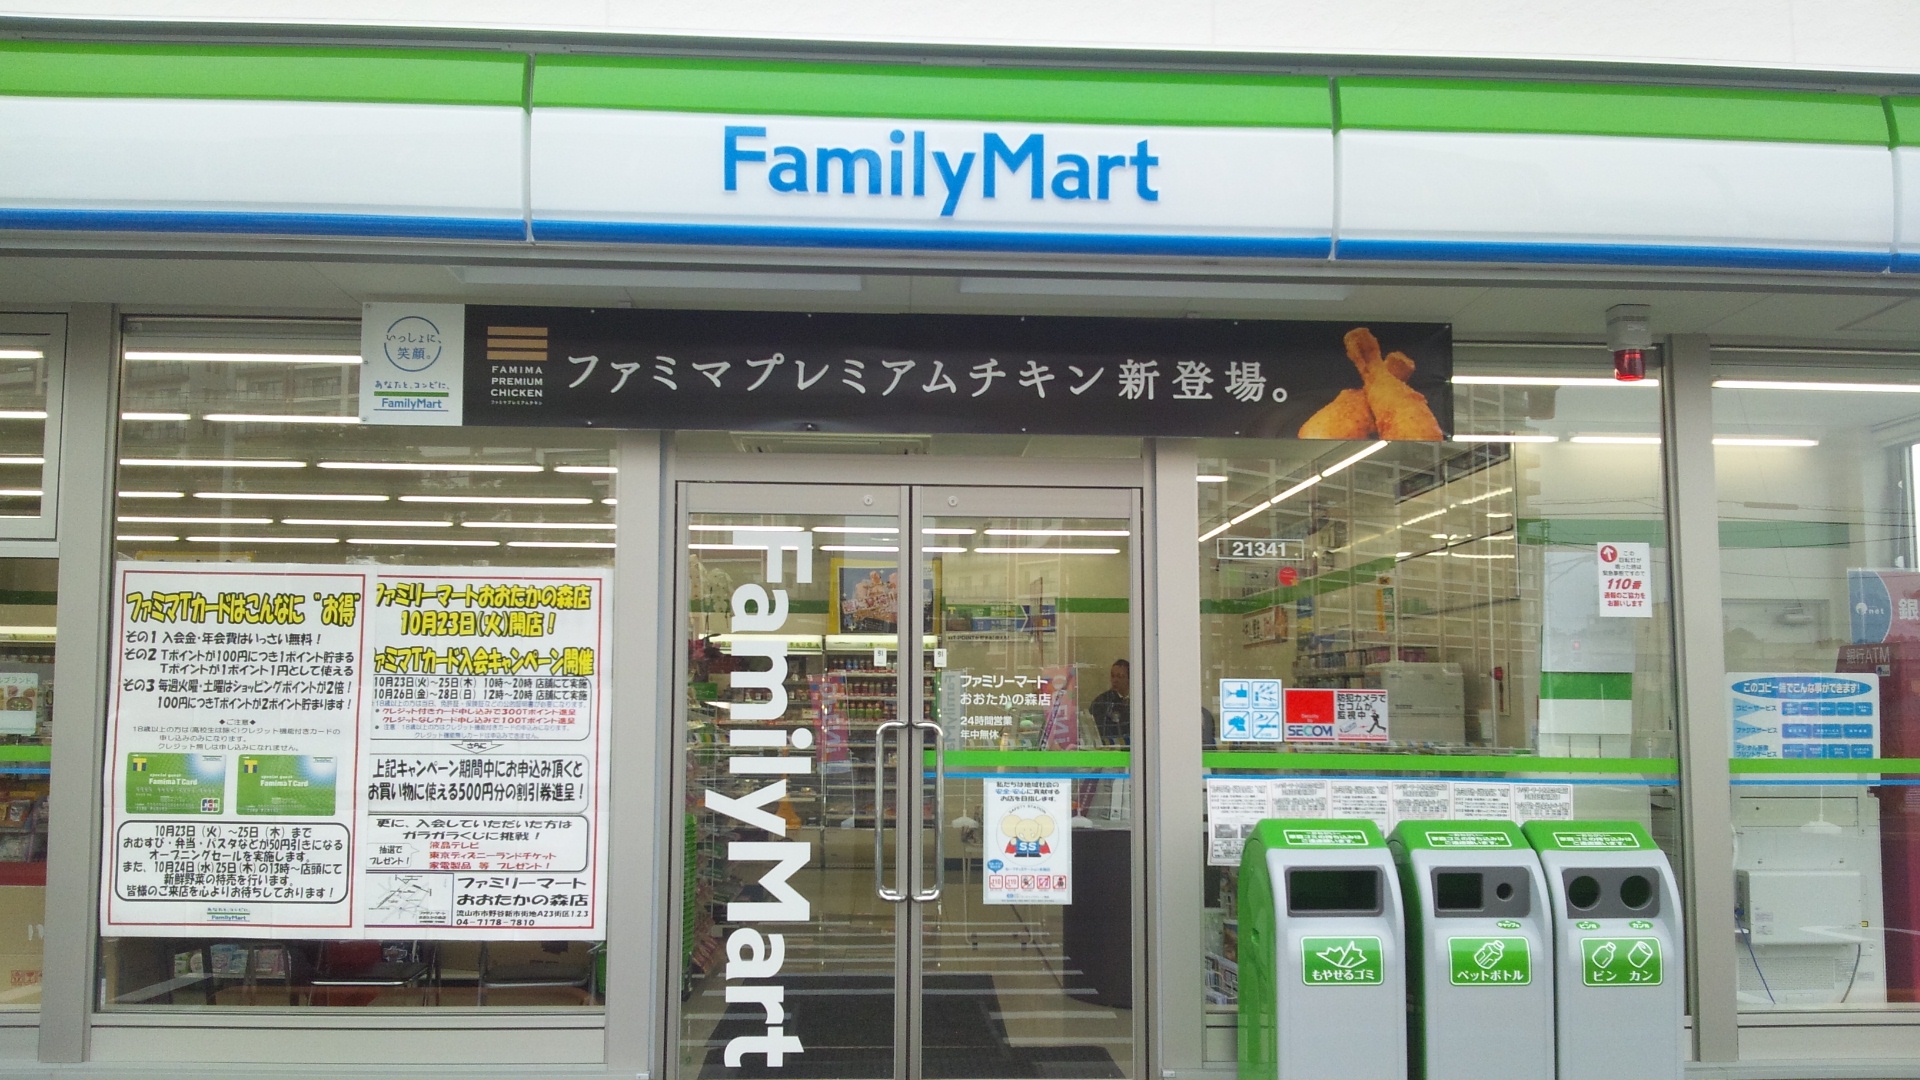 Convenience store. FamilyMart Shin-Matsudo Station store up (convenience store) 361m